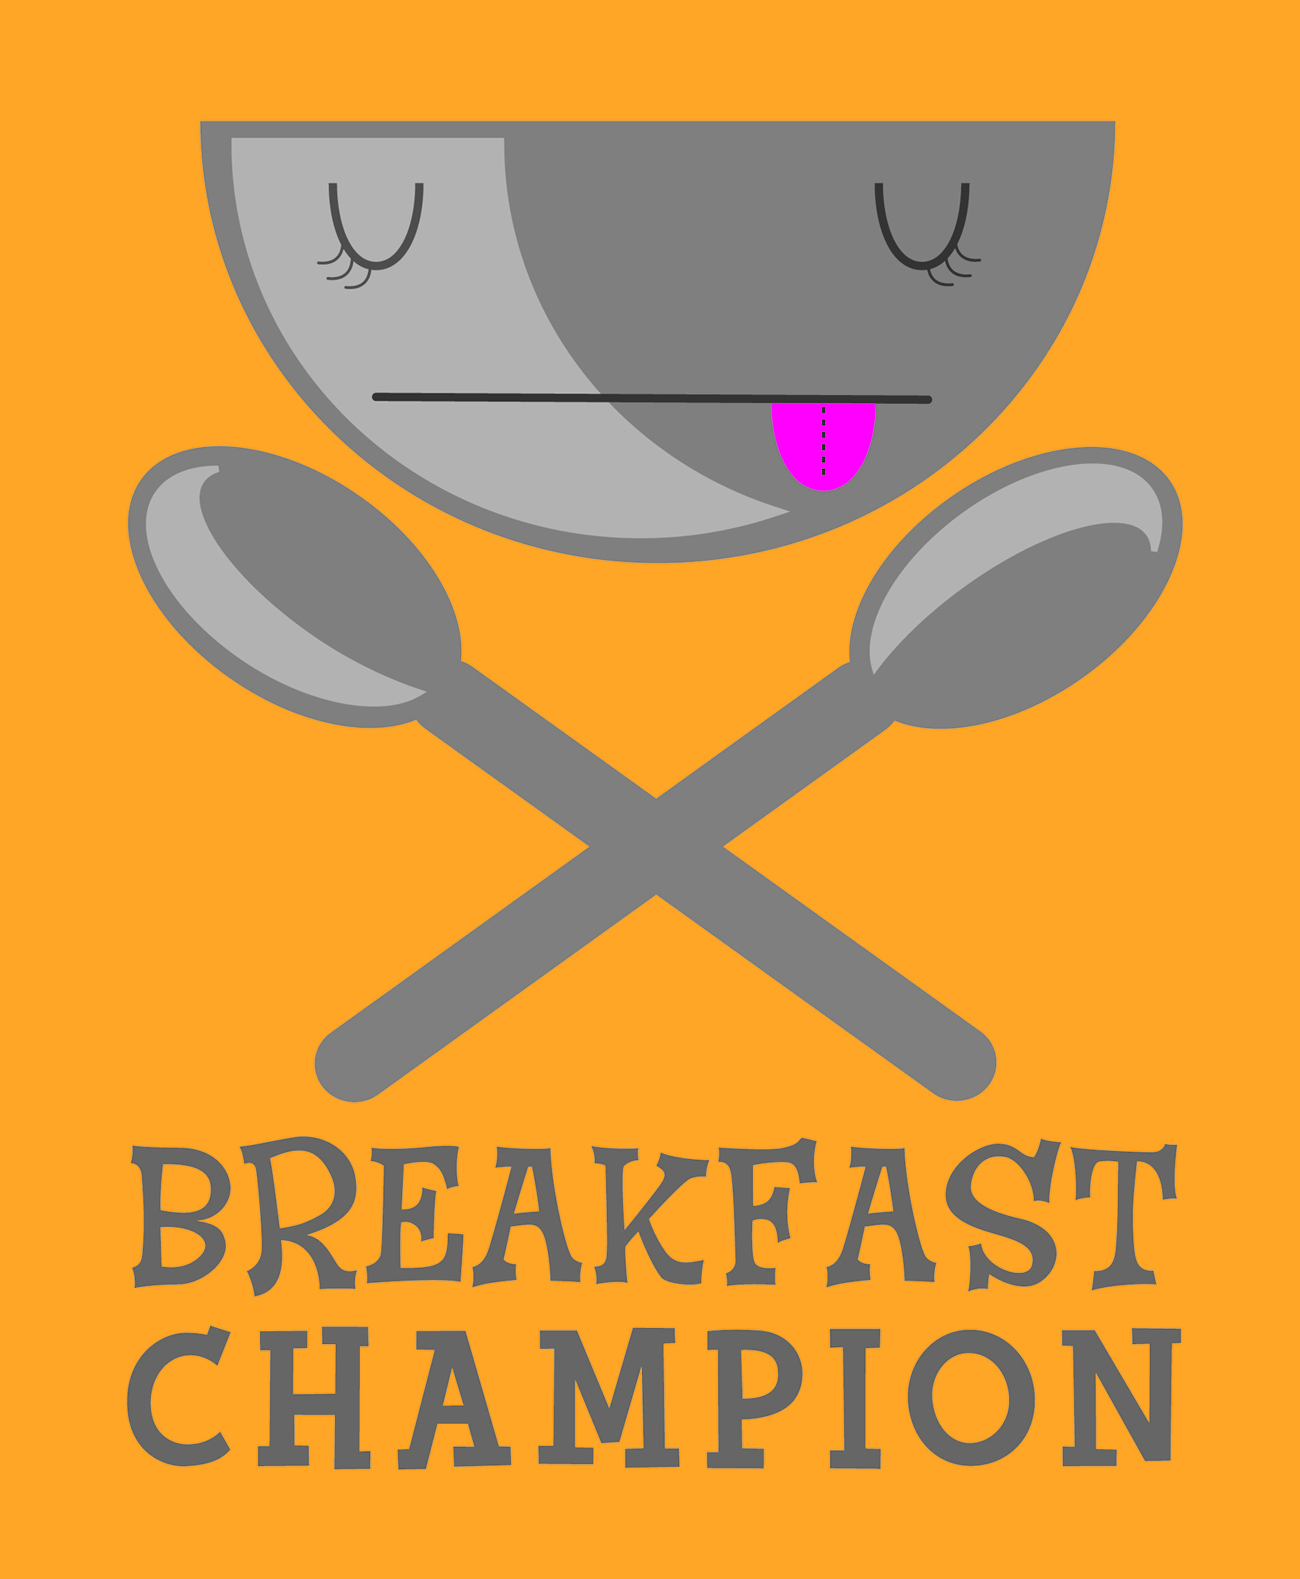 Breakfast Champion